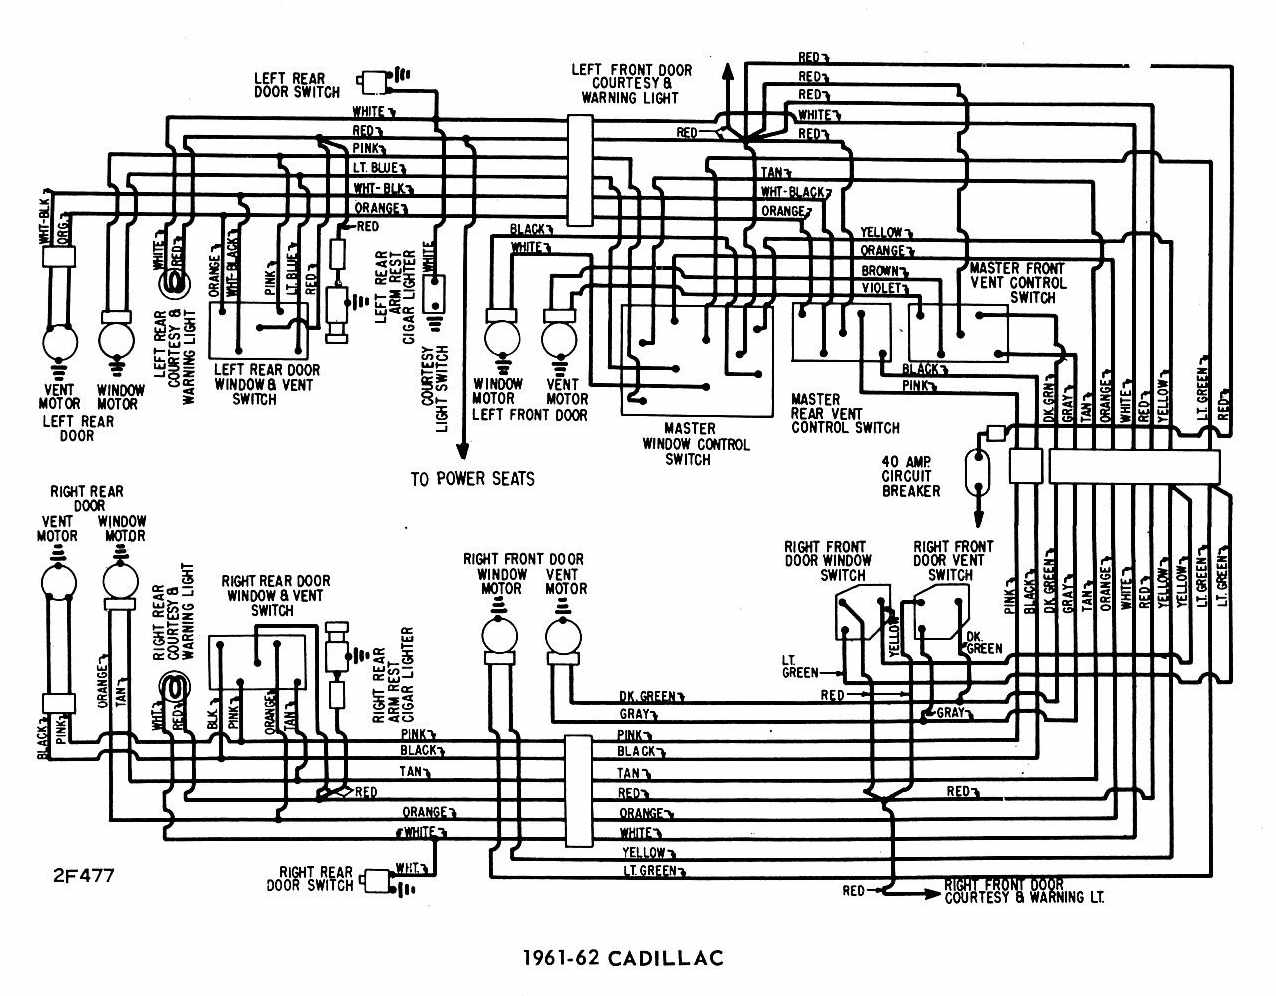 Cadillac Car Pdf Manual Wiring